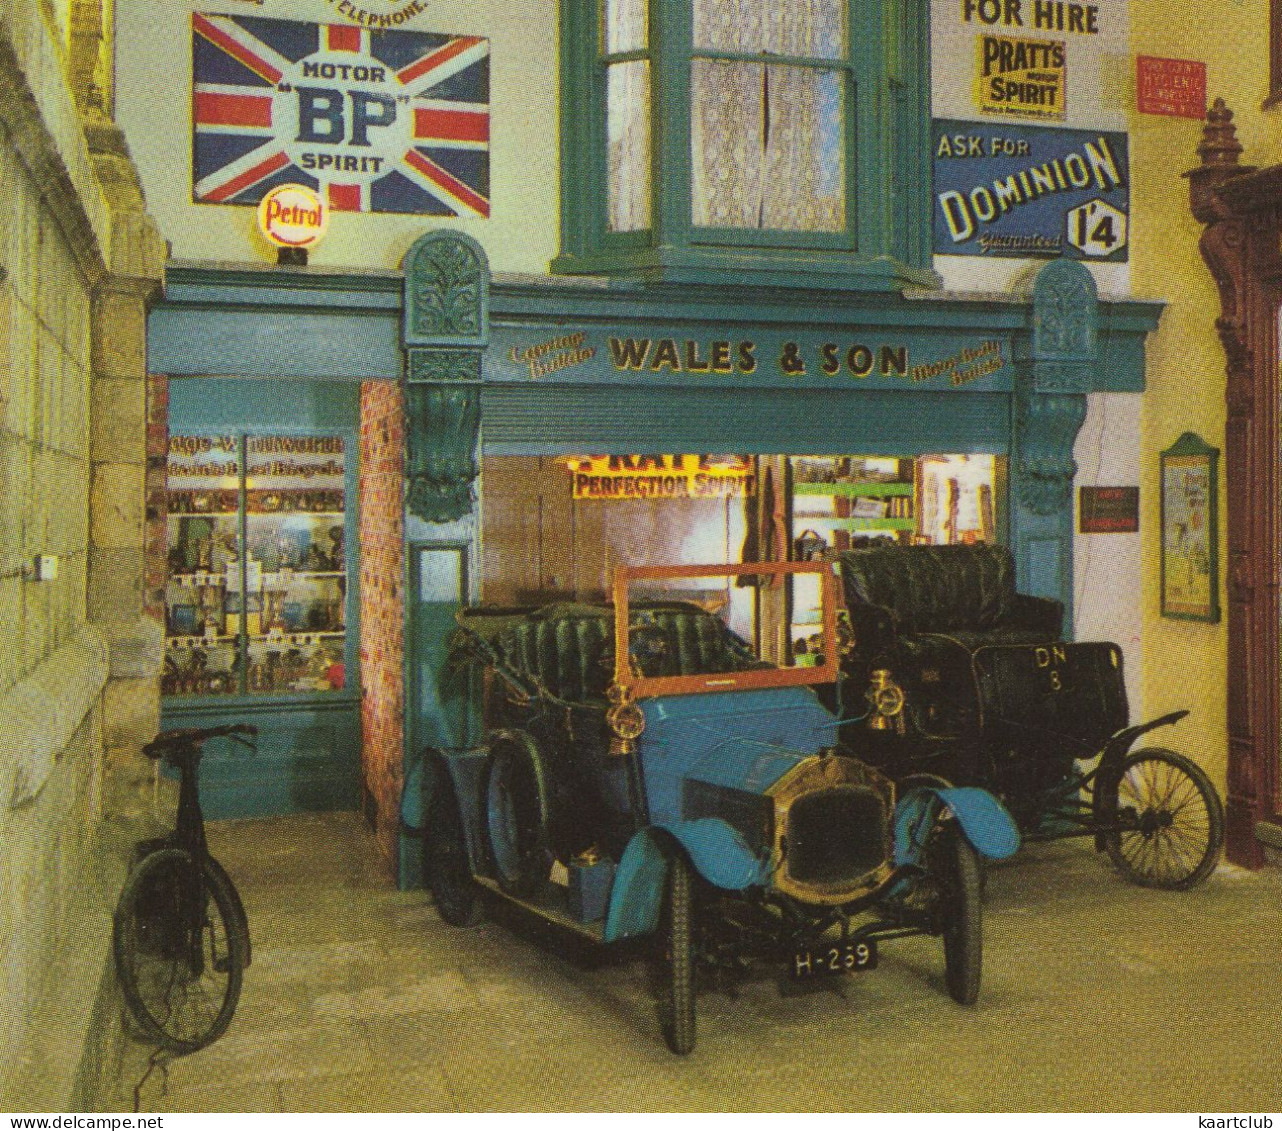 York: 1909 COLIBRI MOTOR CAR, 1899 GROUT STEAM CAR, 2 OLD BICYCLES - 'Motor B.P. Spirit' - Castle Museum Garage - (U.K.) - Passenger Cars